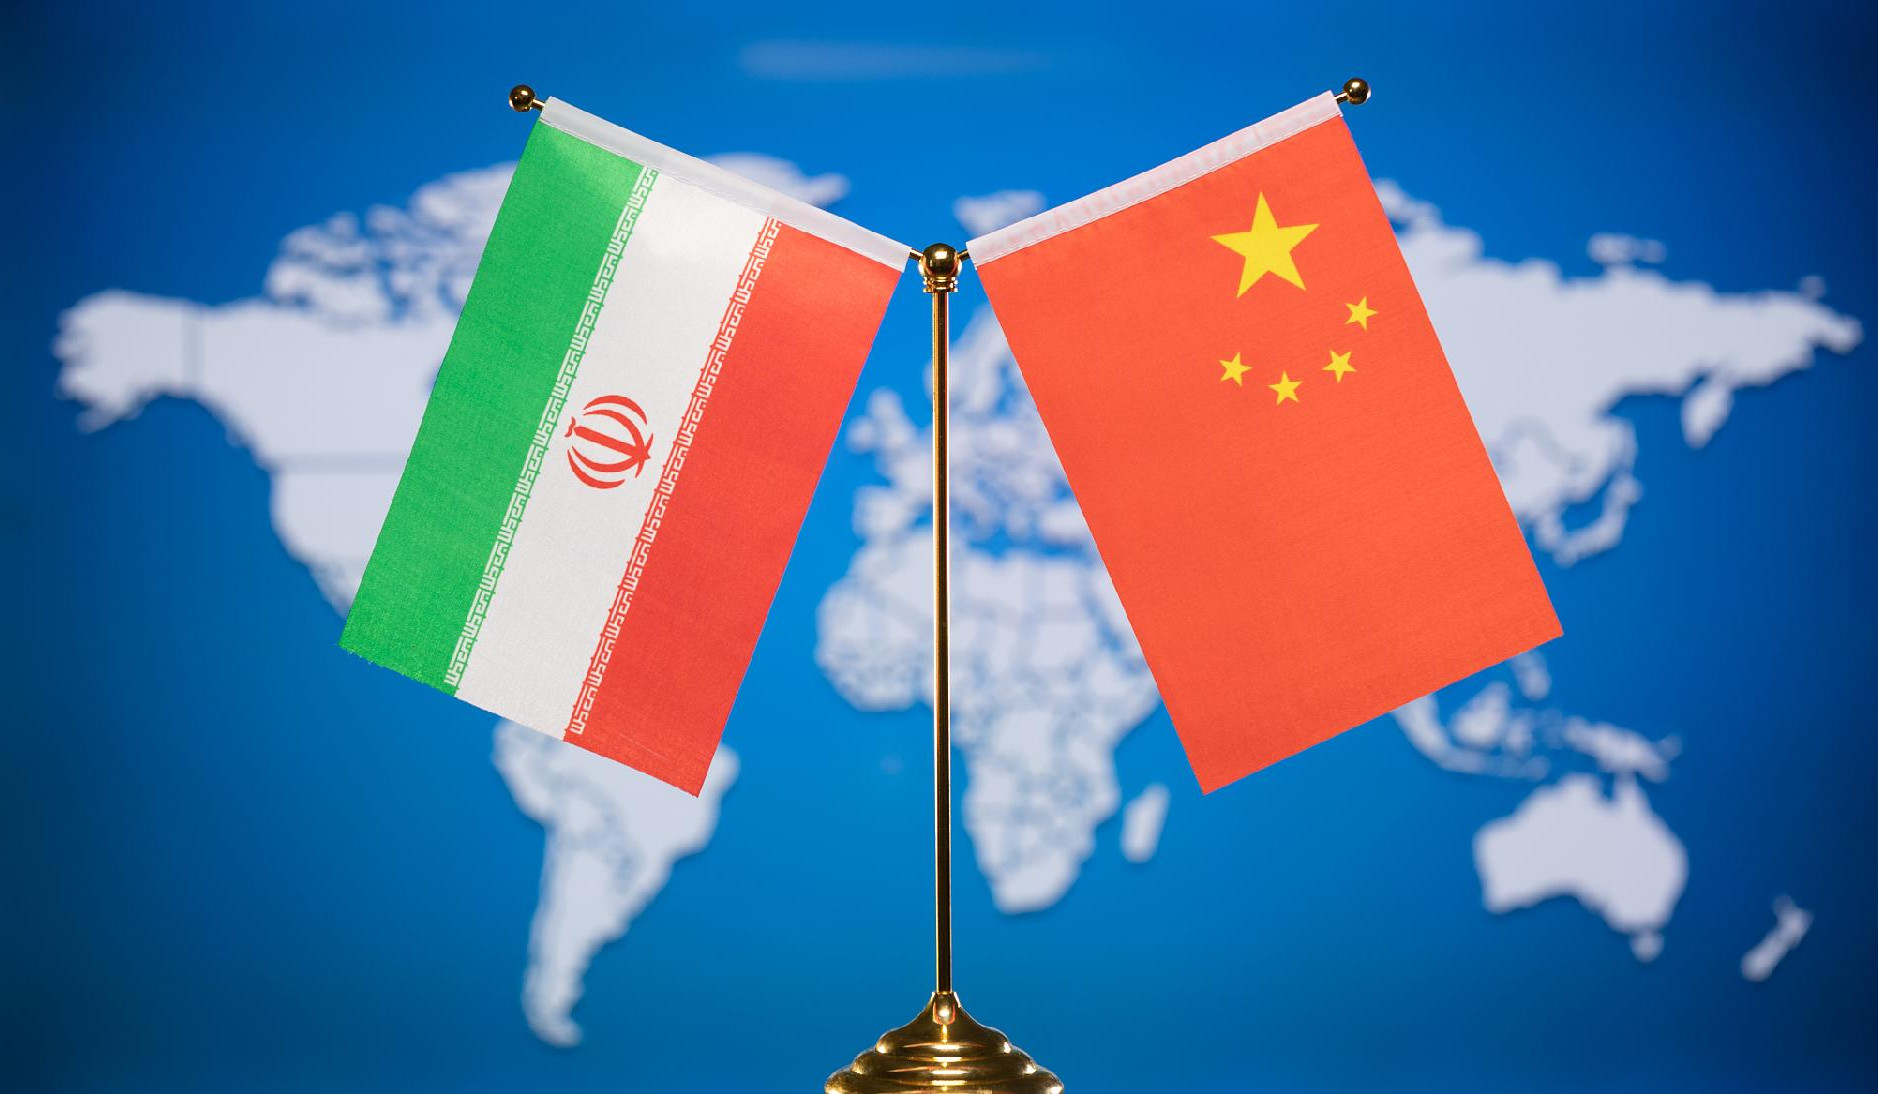 Китай и Иран объявили о начале реализации соглашения о сотрудничестве на 25 лет